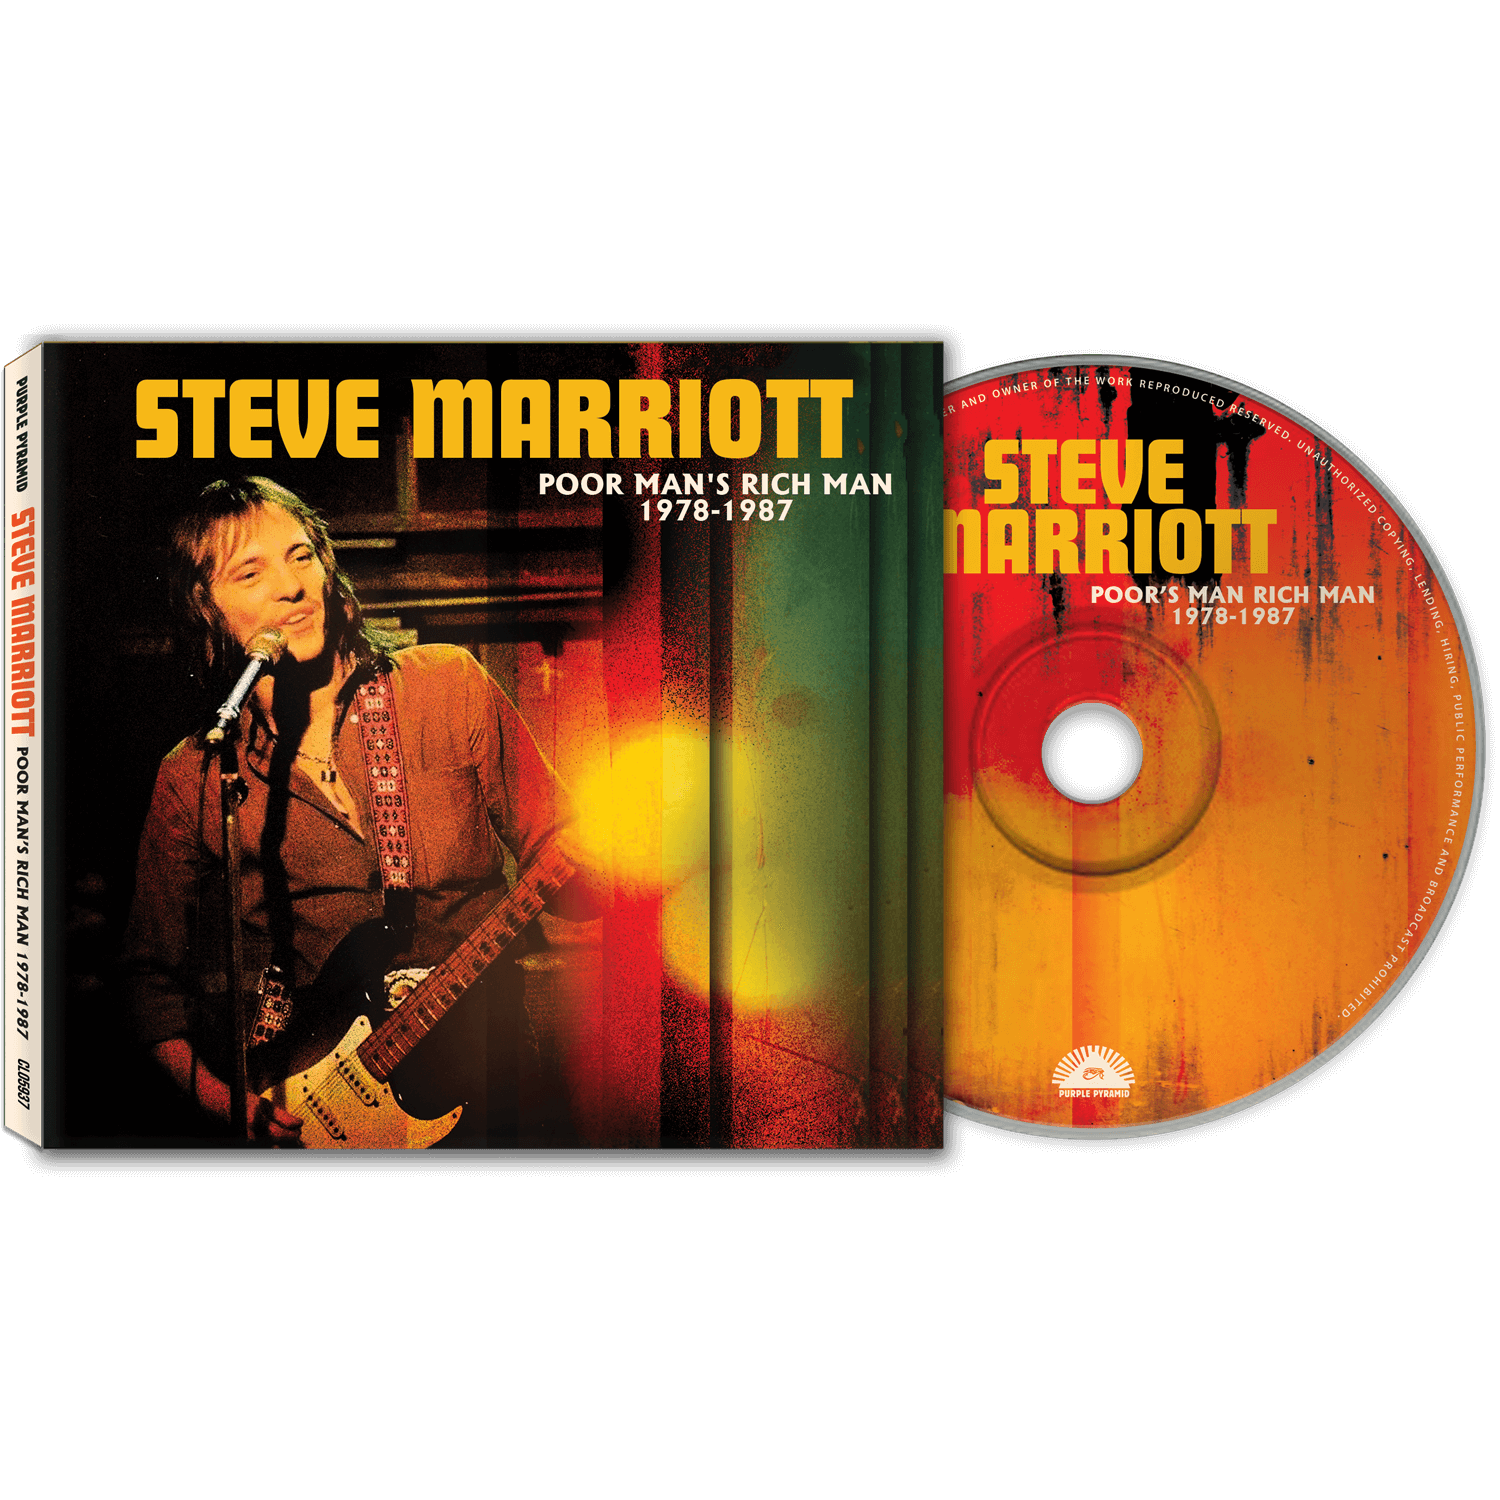 Steve Marriott - Poor Man's Rich Man 1978-1987 (CD Digipak)